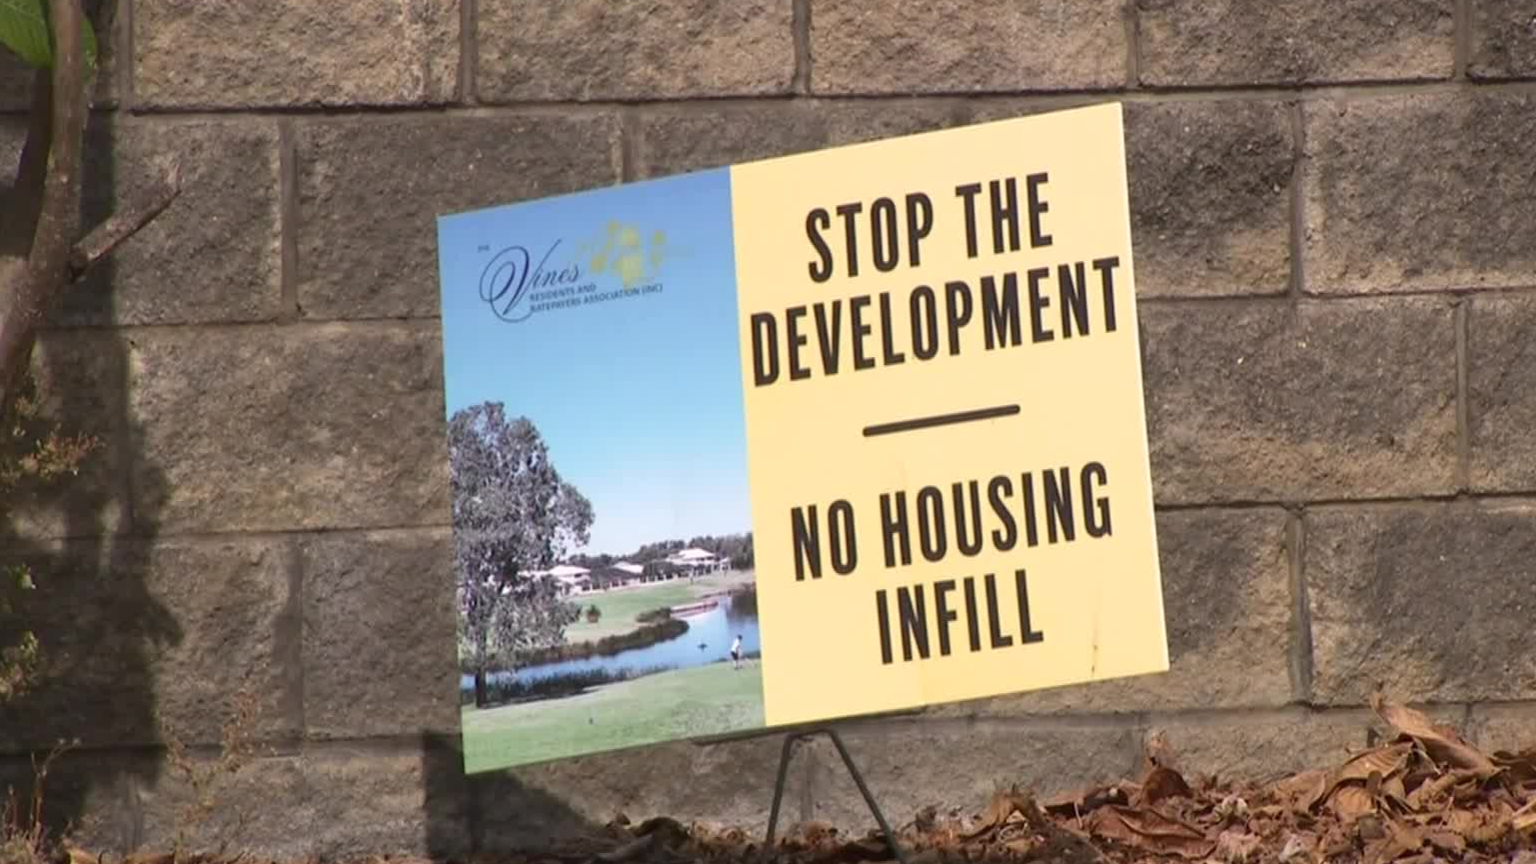 Golf estate residents raise concerns about development plans